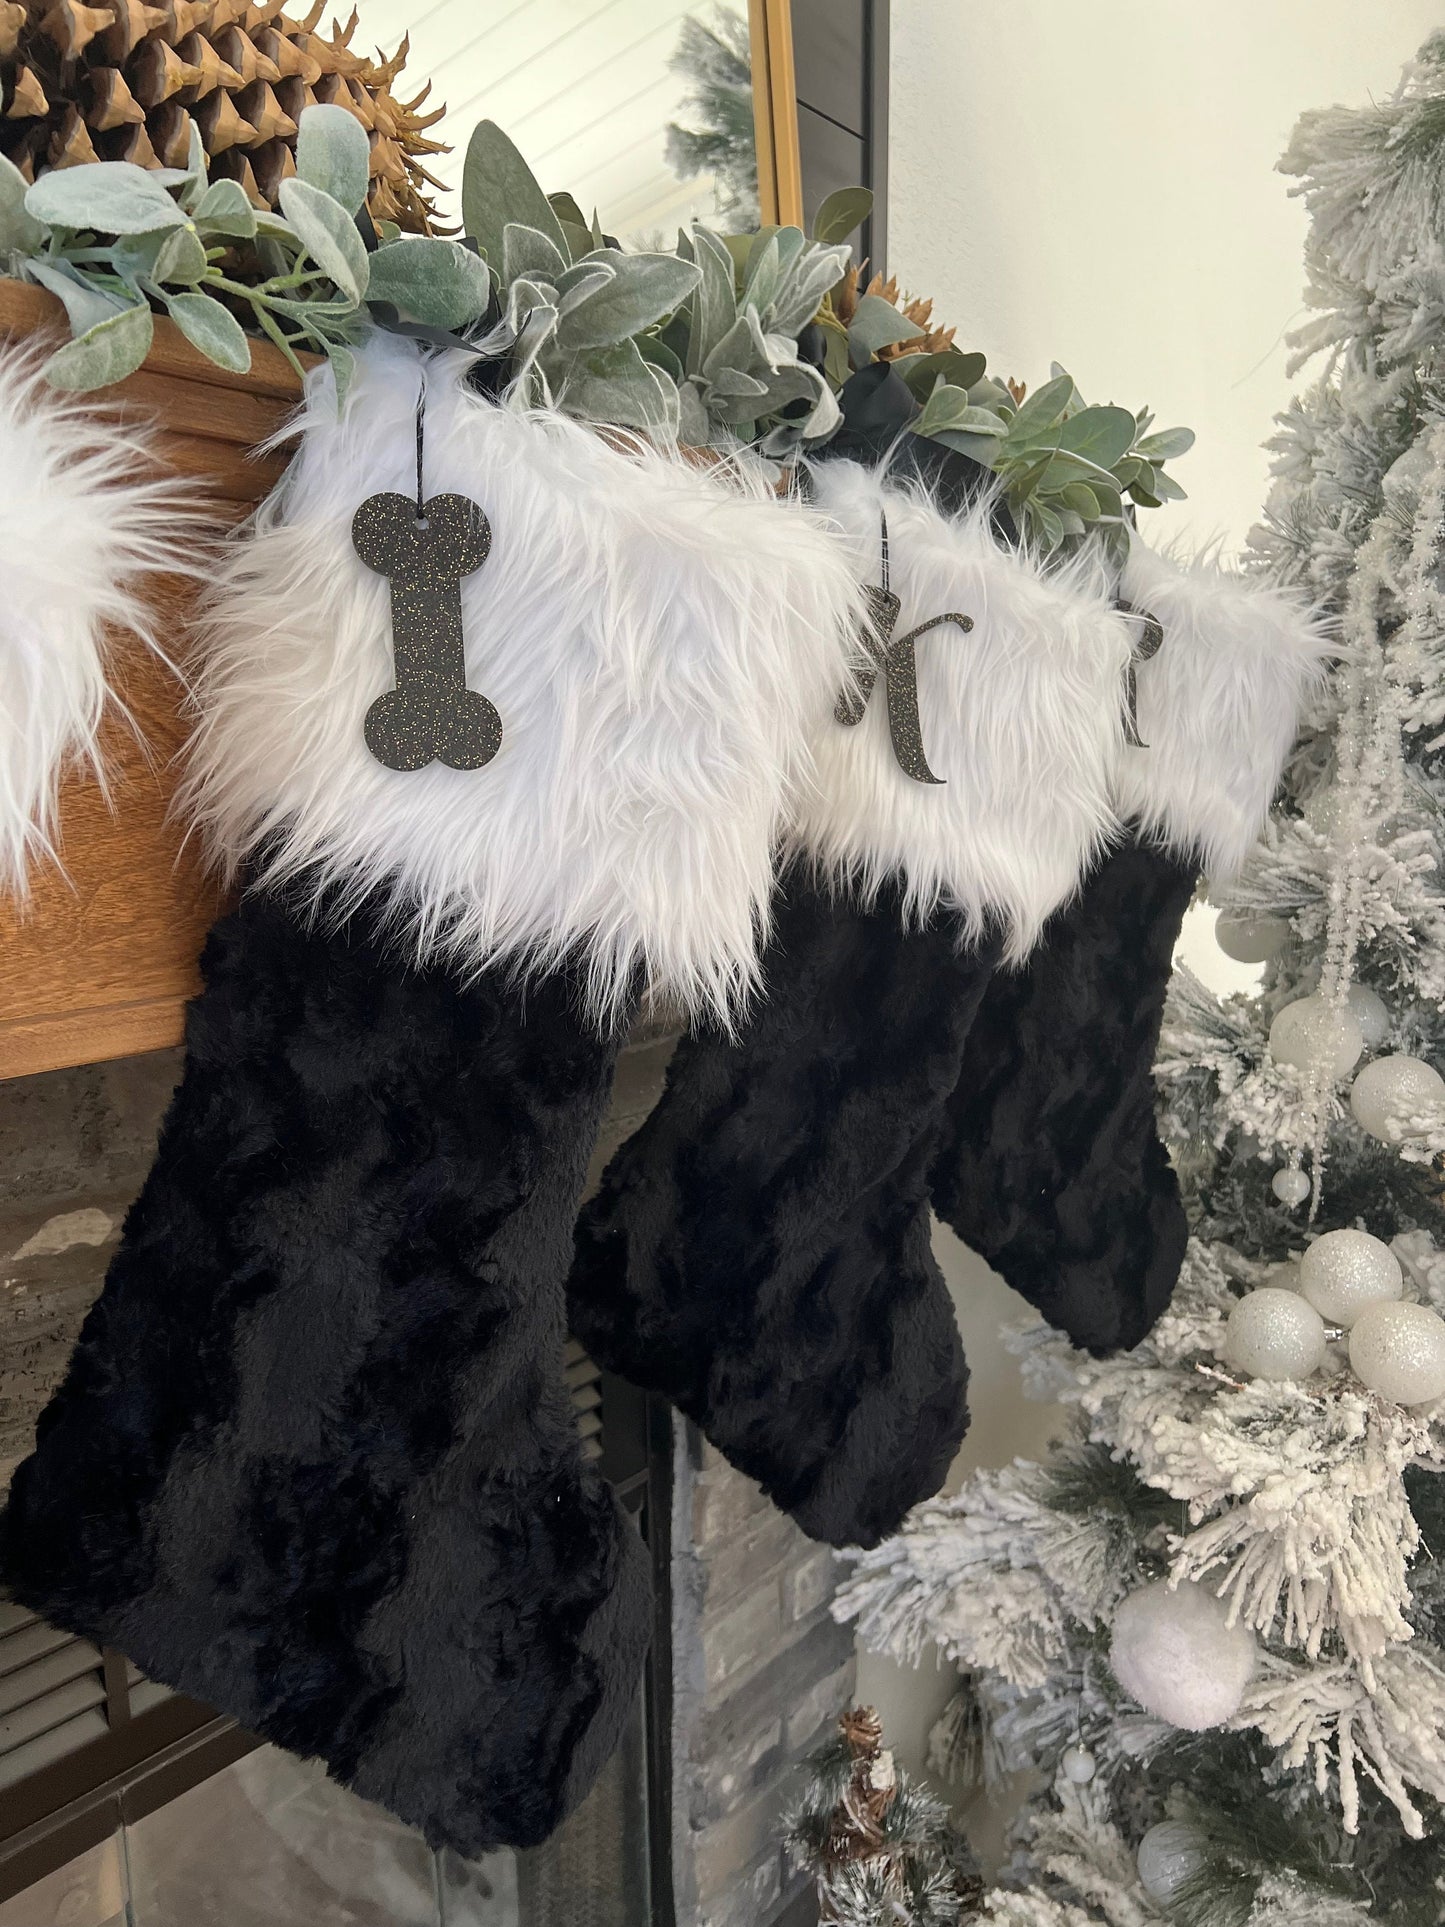 Black Christmas Stocking - Personalized